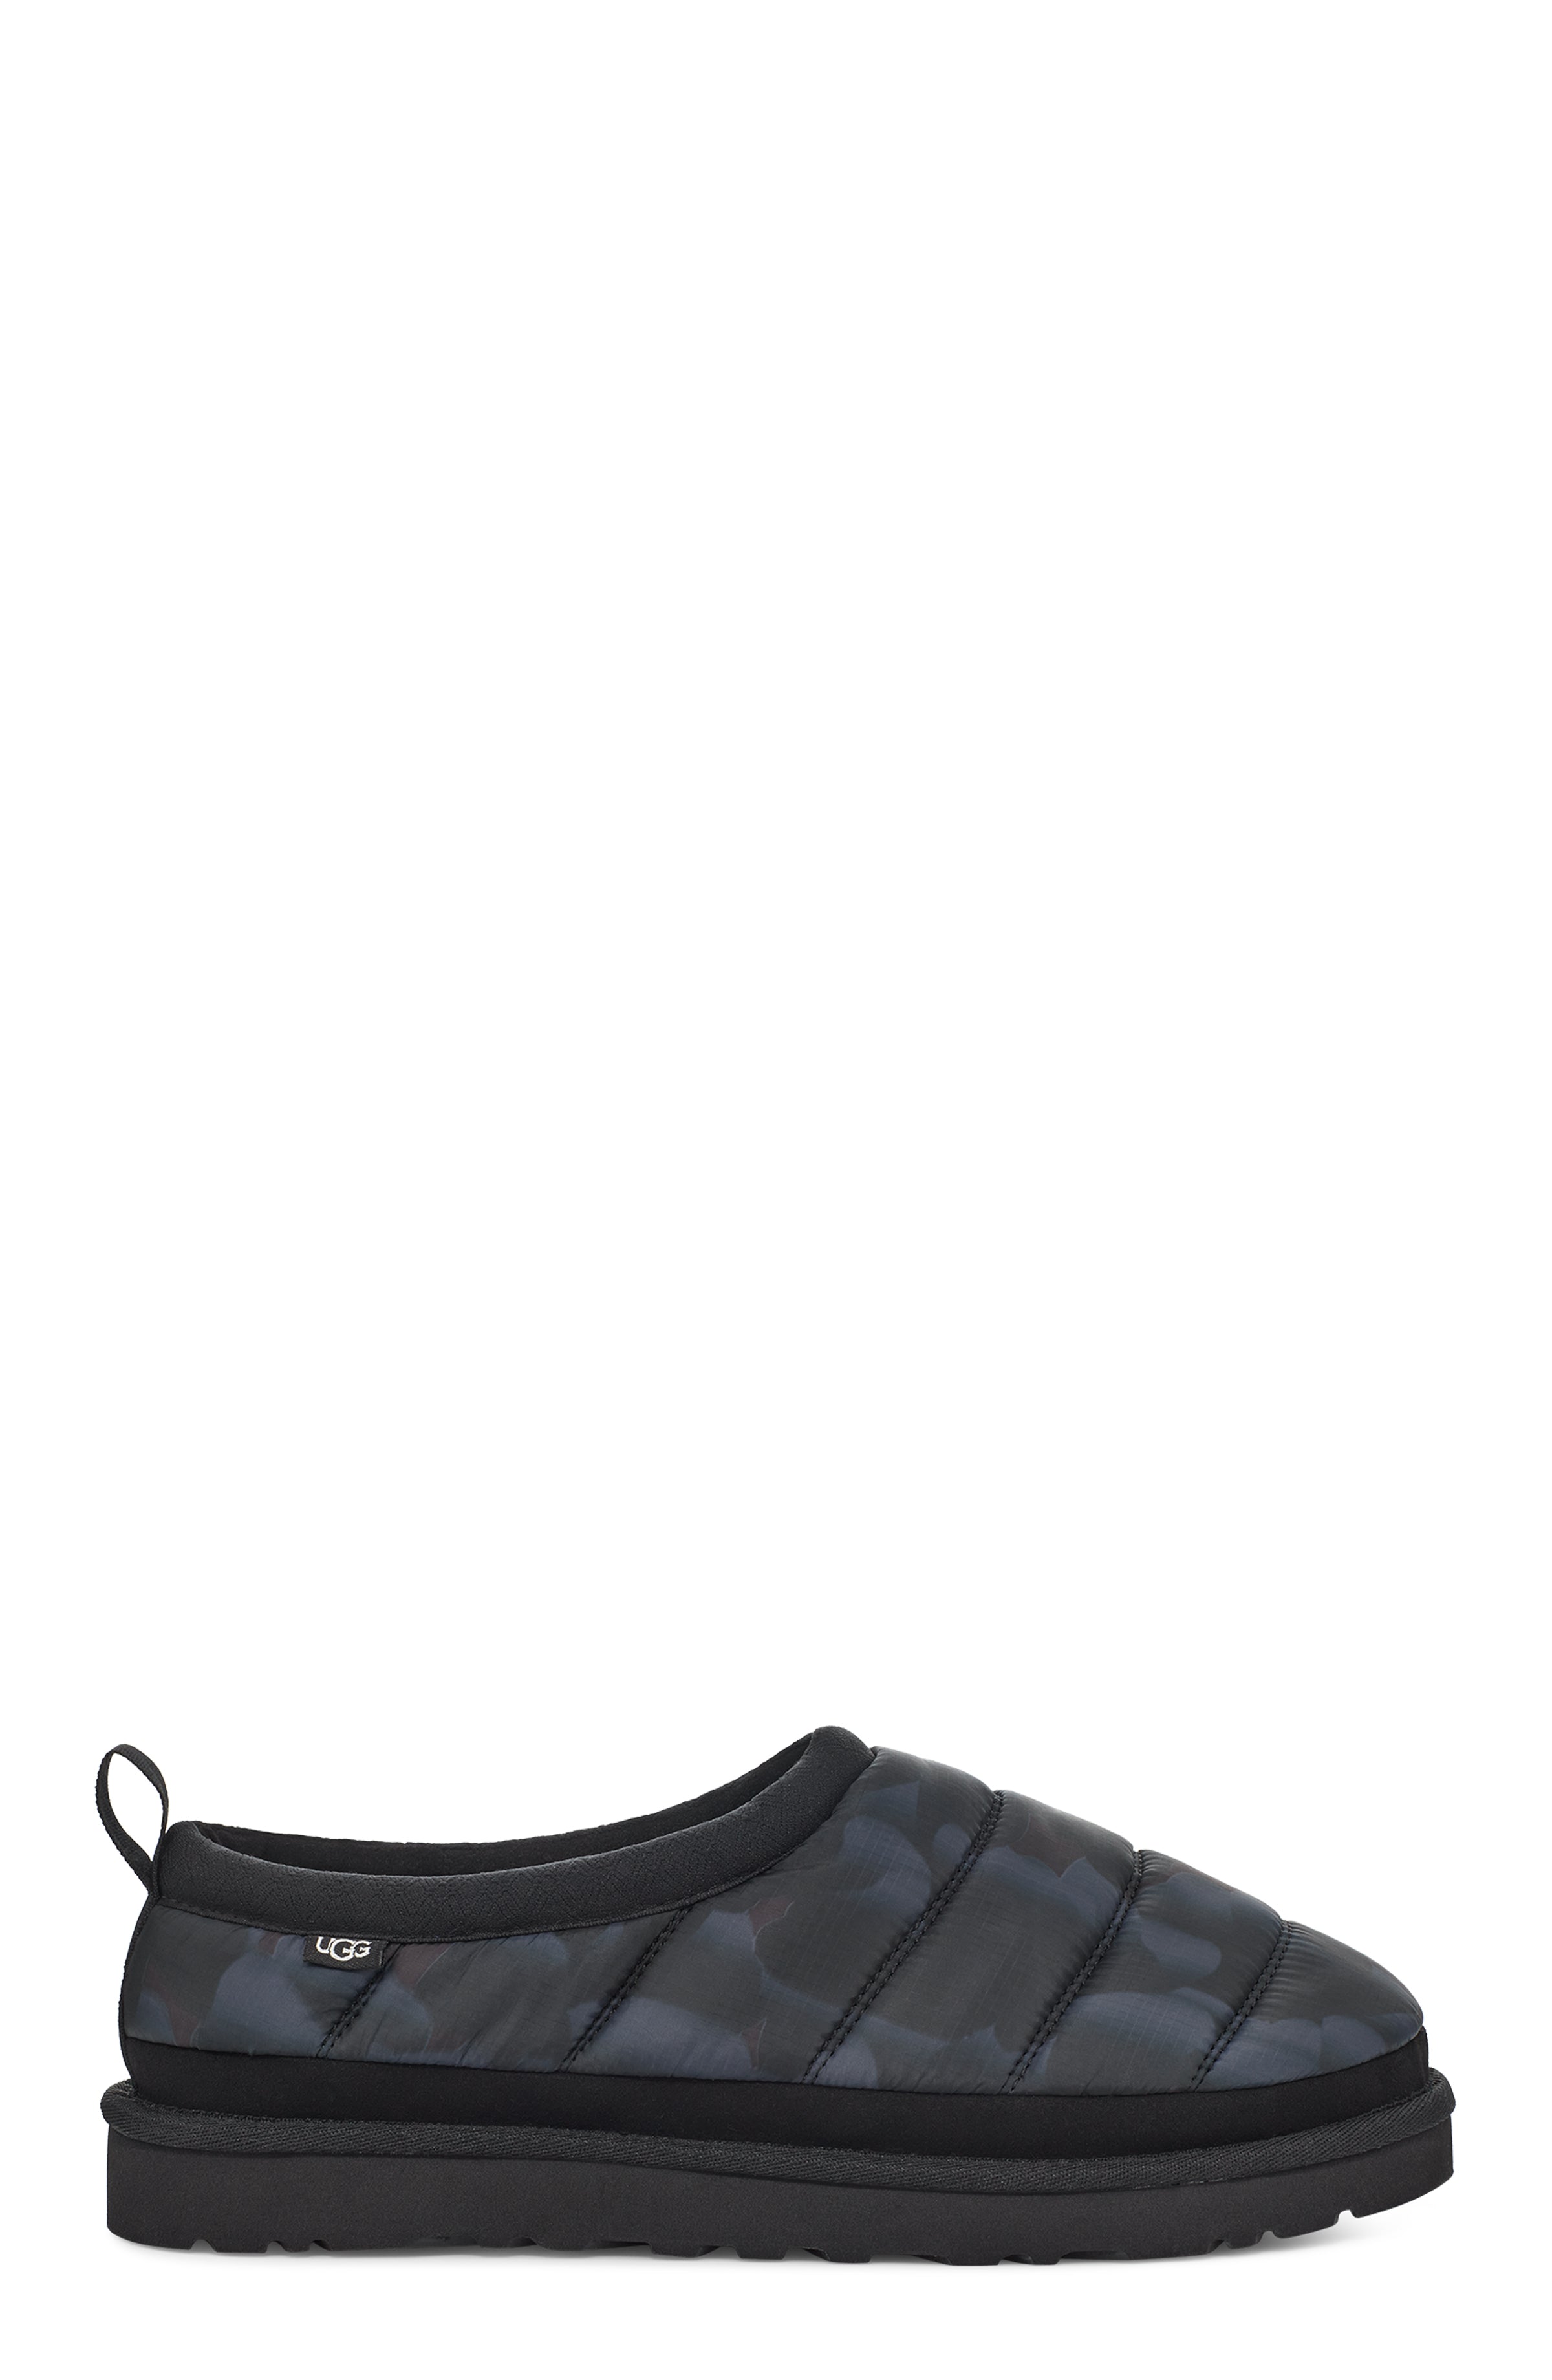 Sample UGG Tasman LTA Sandal Peace Camo Black Poppy 8 